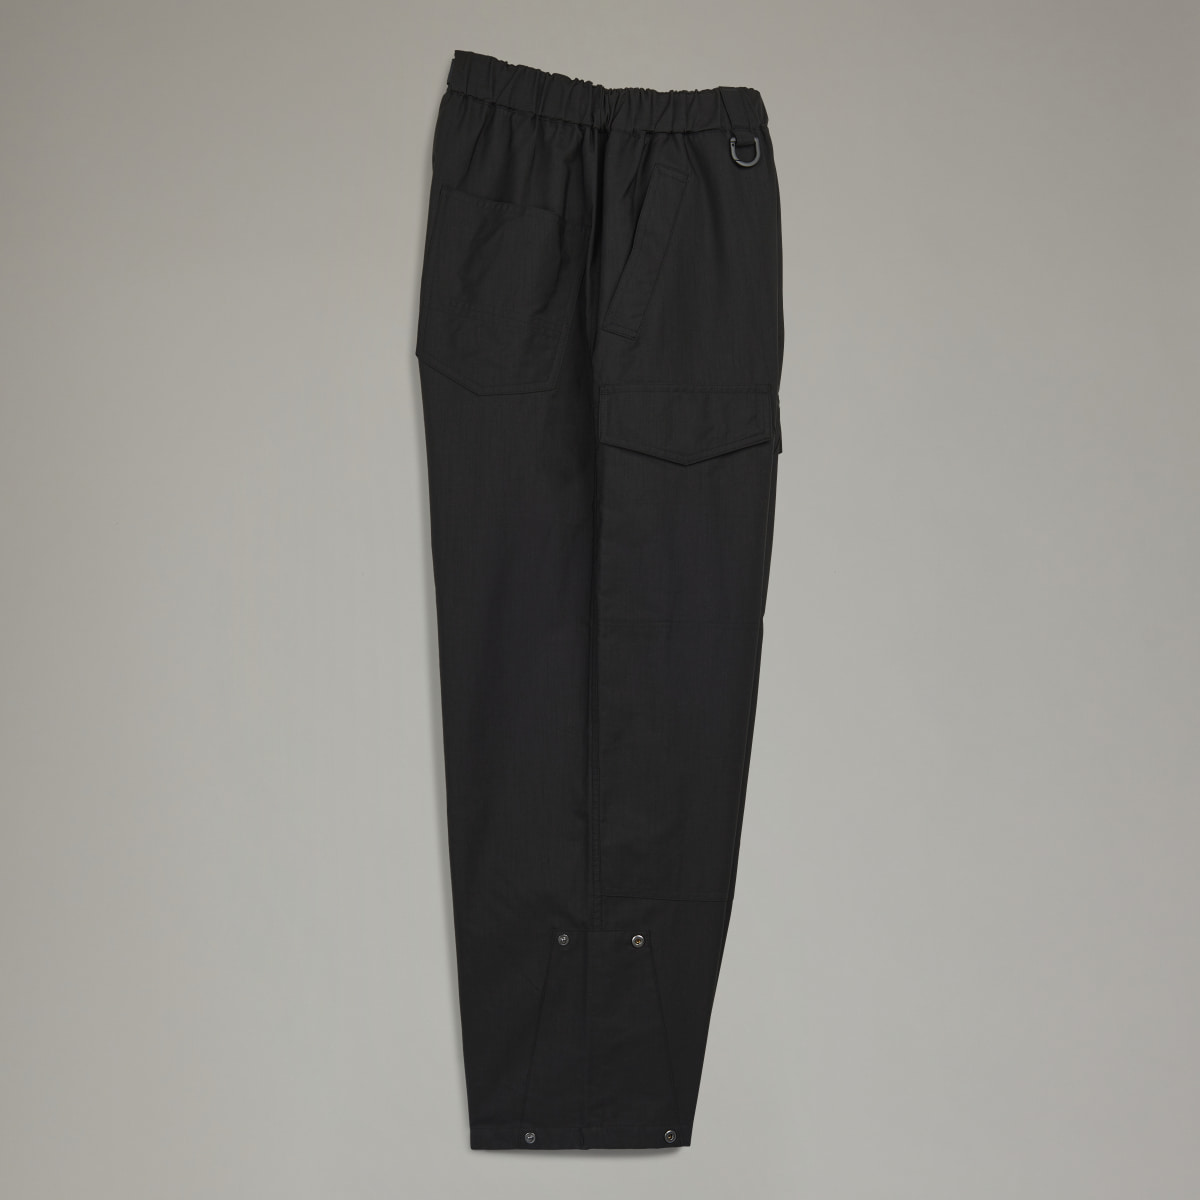 Adidas Y-3 Workwear Cargo Pants. 7